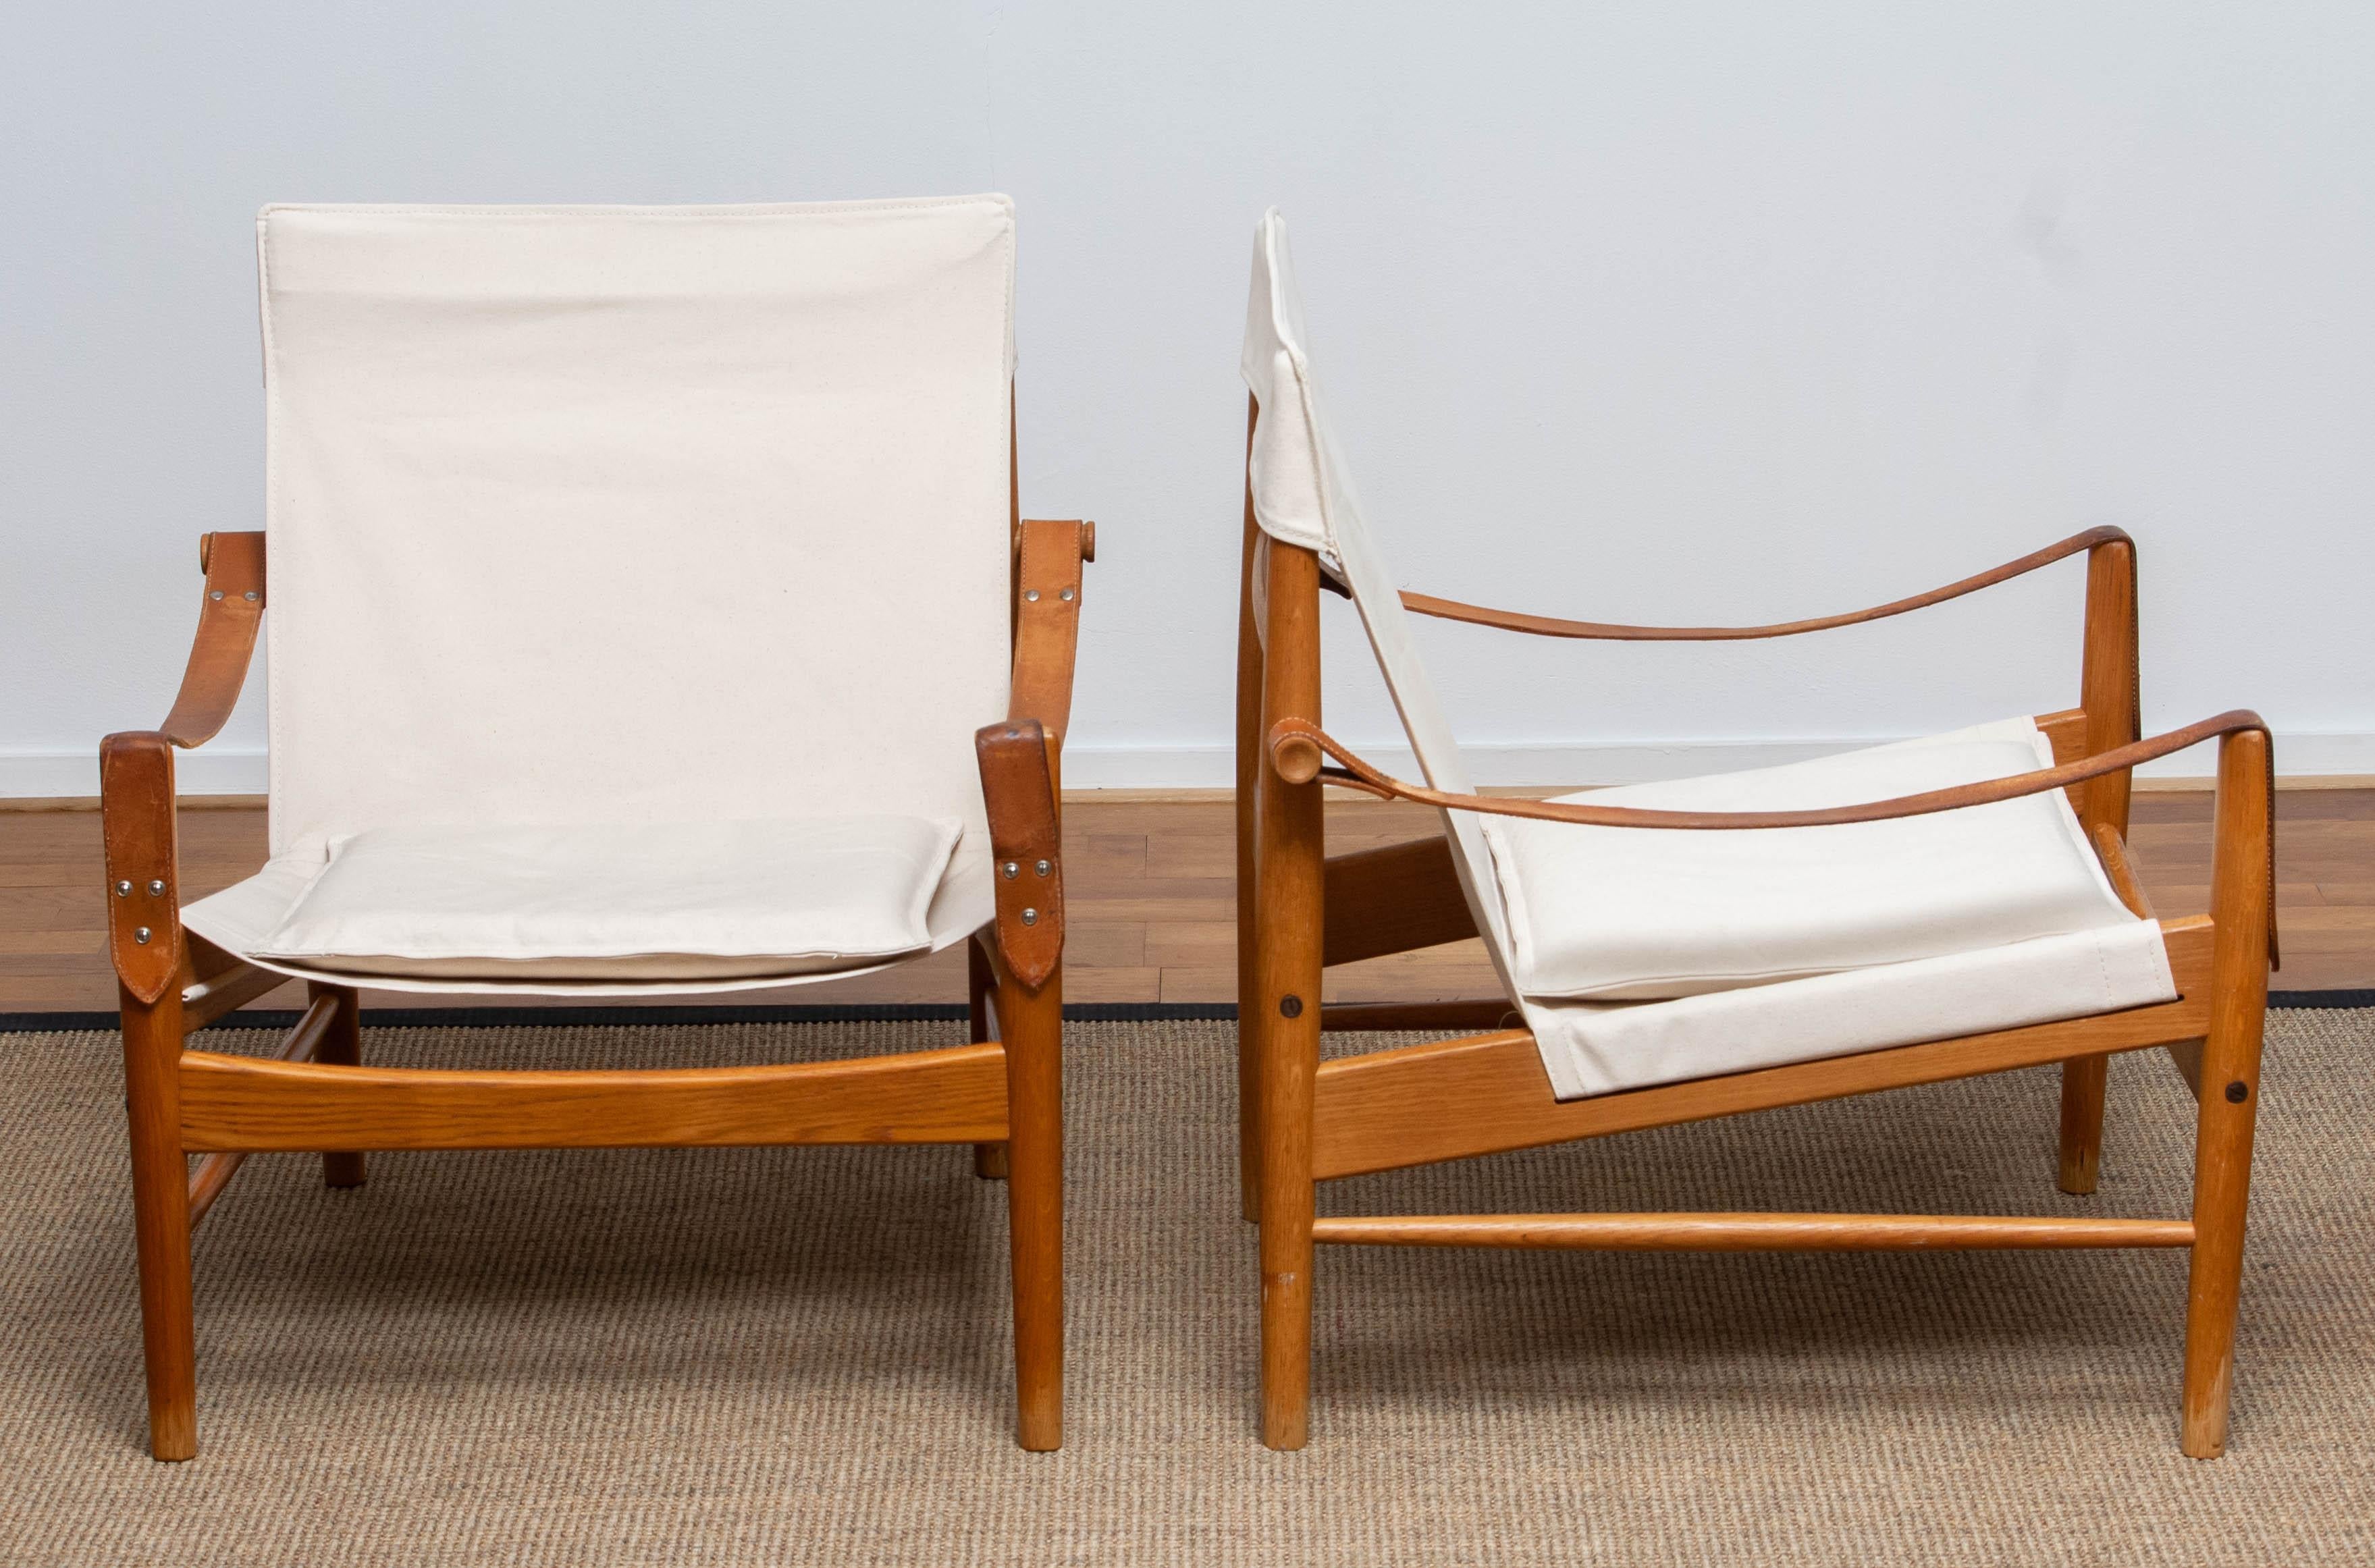 1960s, a Pair of Safari Chairs by Hans Olsen for Viska Möbler in Kinna, Sweden 2